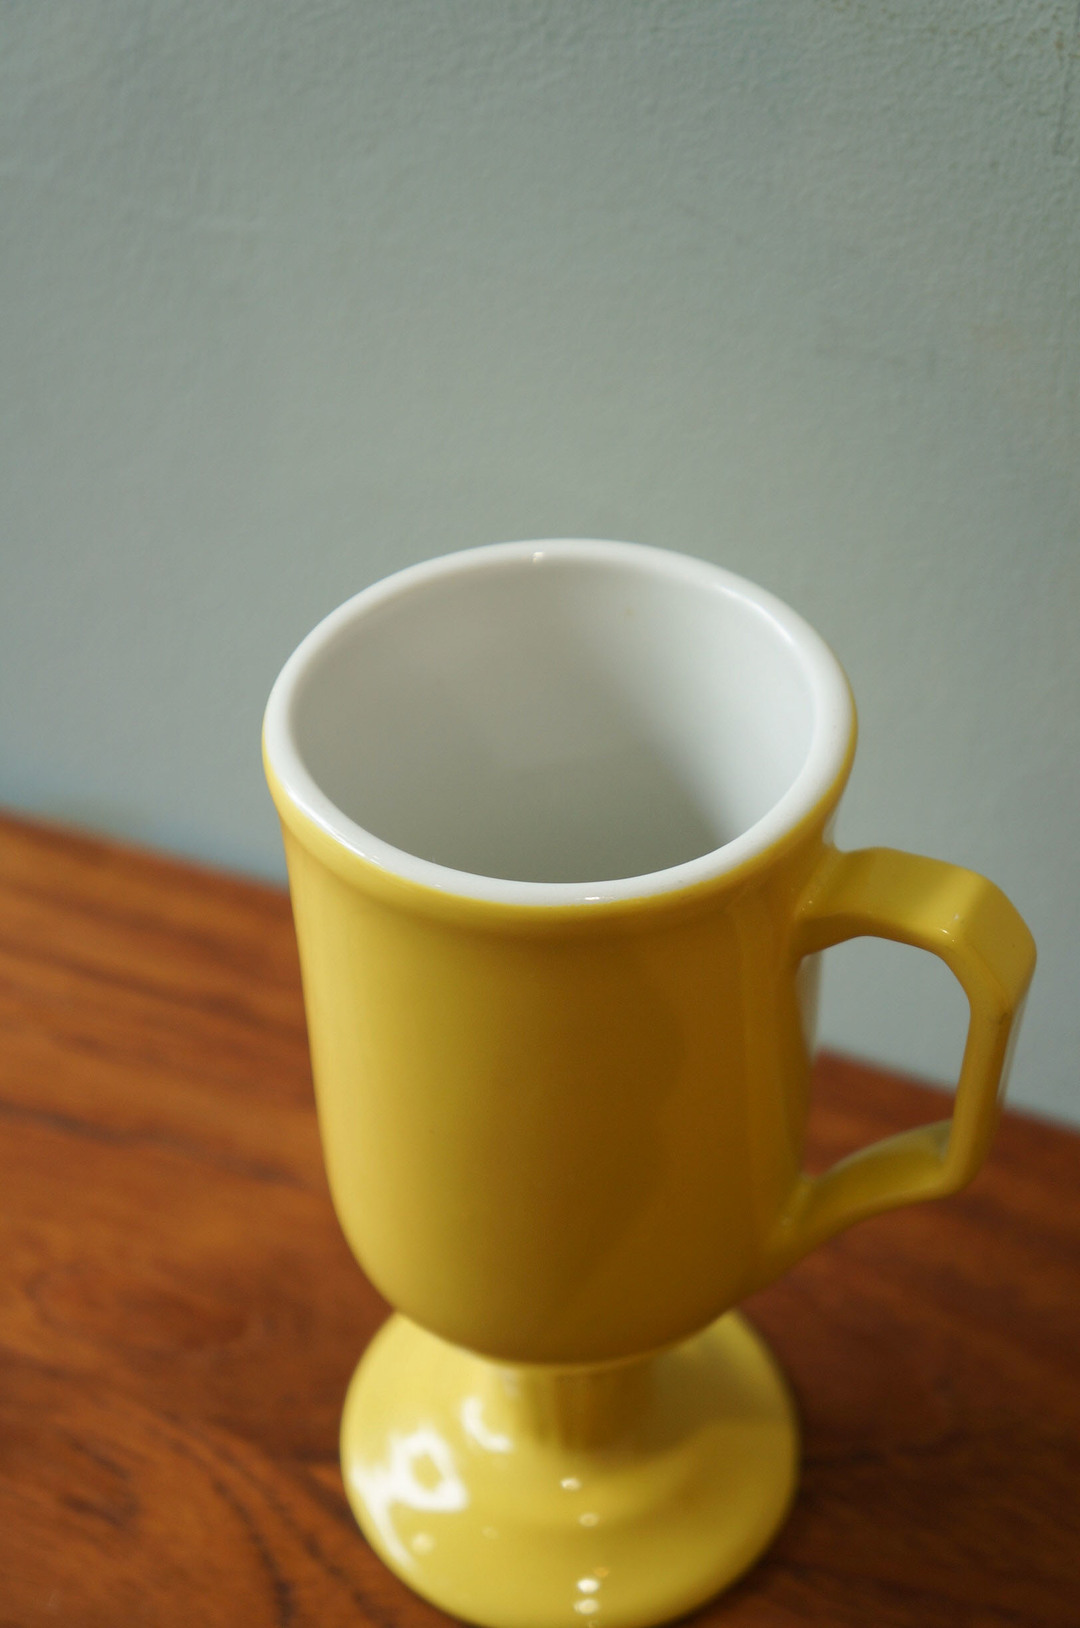 US Vintage Shenango Pedestal Mug Cup/アメリカヴィンテージ シェナンゴ マグカップ 陶器 食器 ミッドセンチュリー レトロ 1